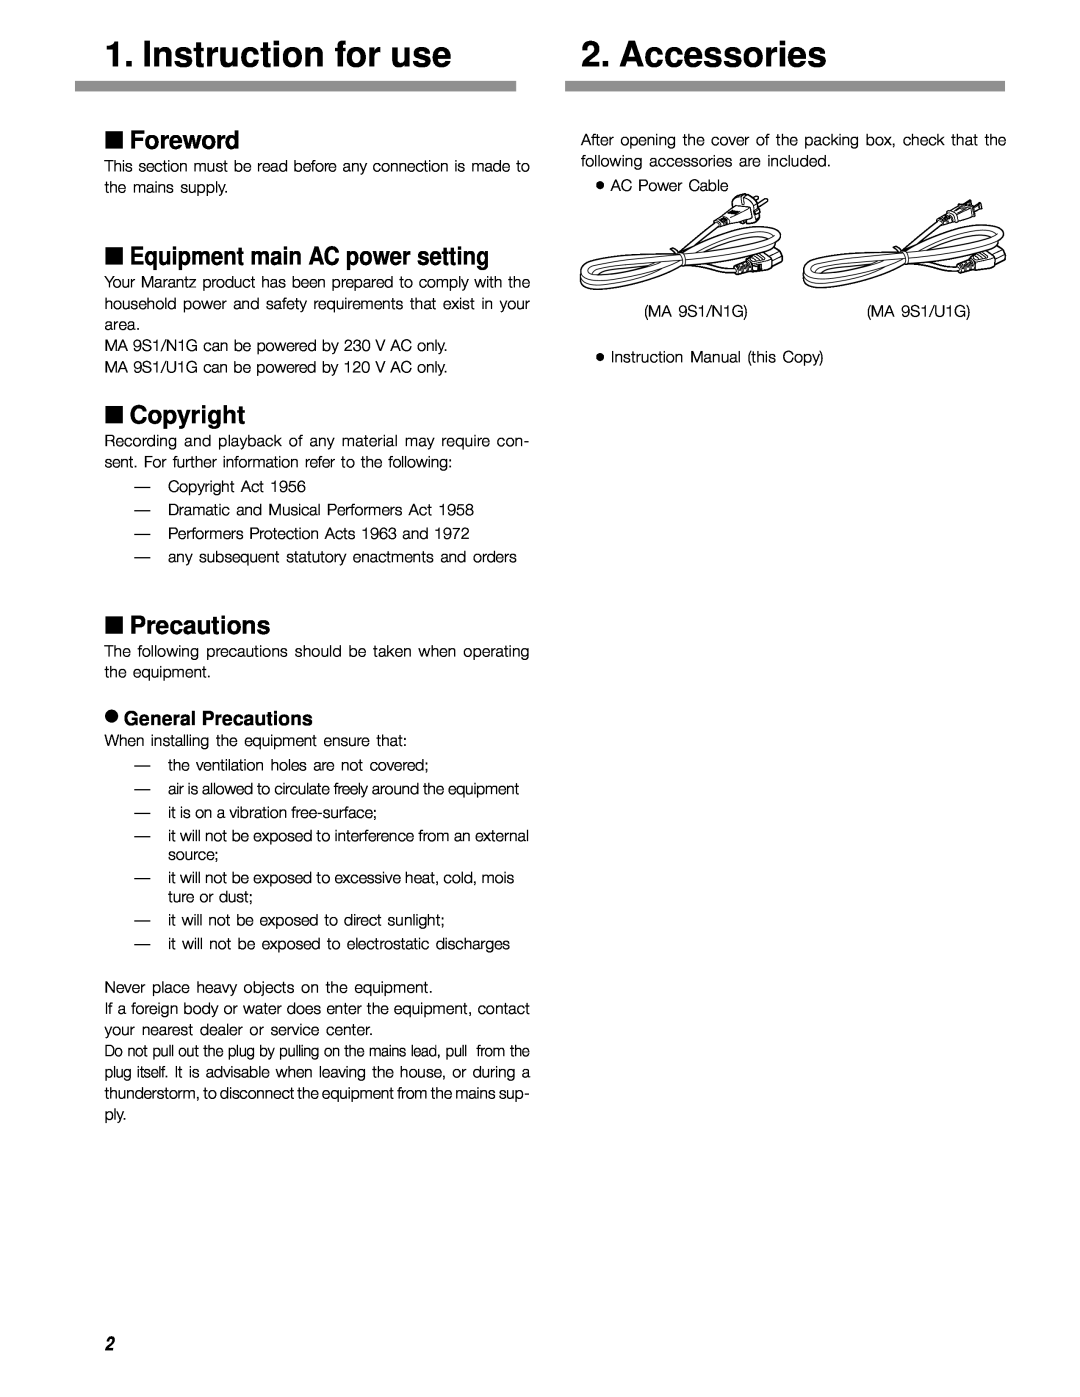 Marantz MA-9S1 manual Instruction for use, Accessories, Foreword, Equipment main AC power setting, Copyright, Precautions 